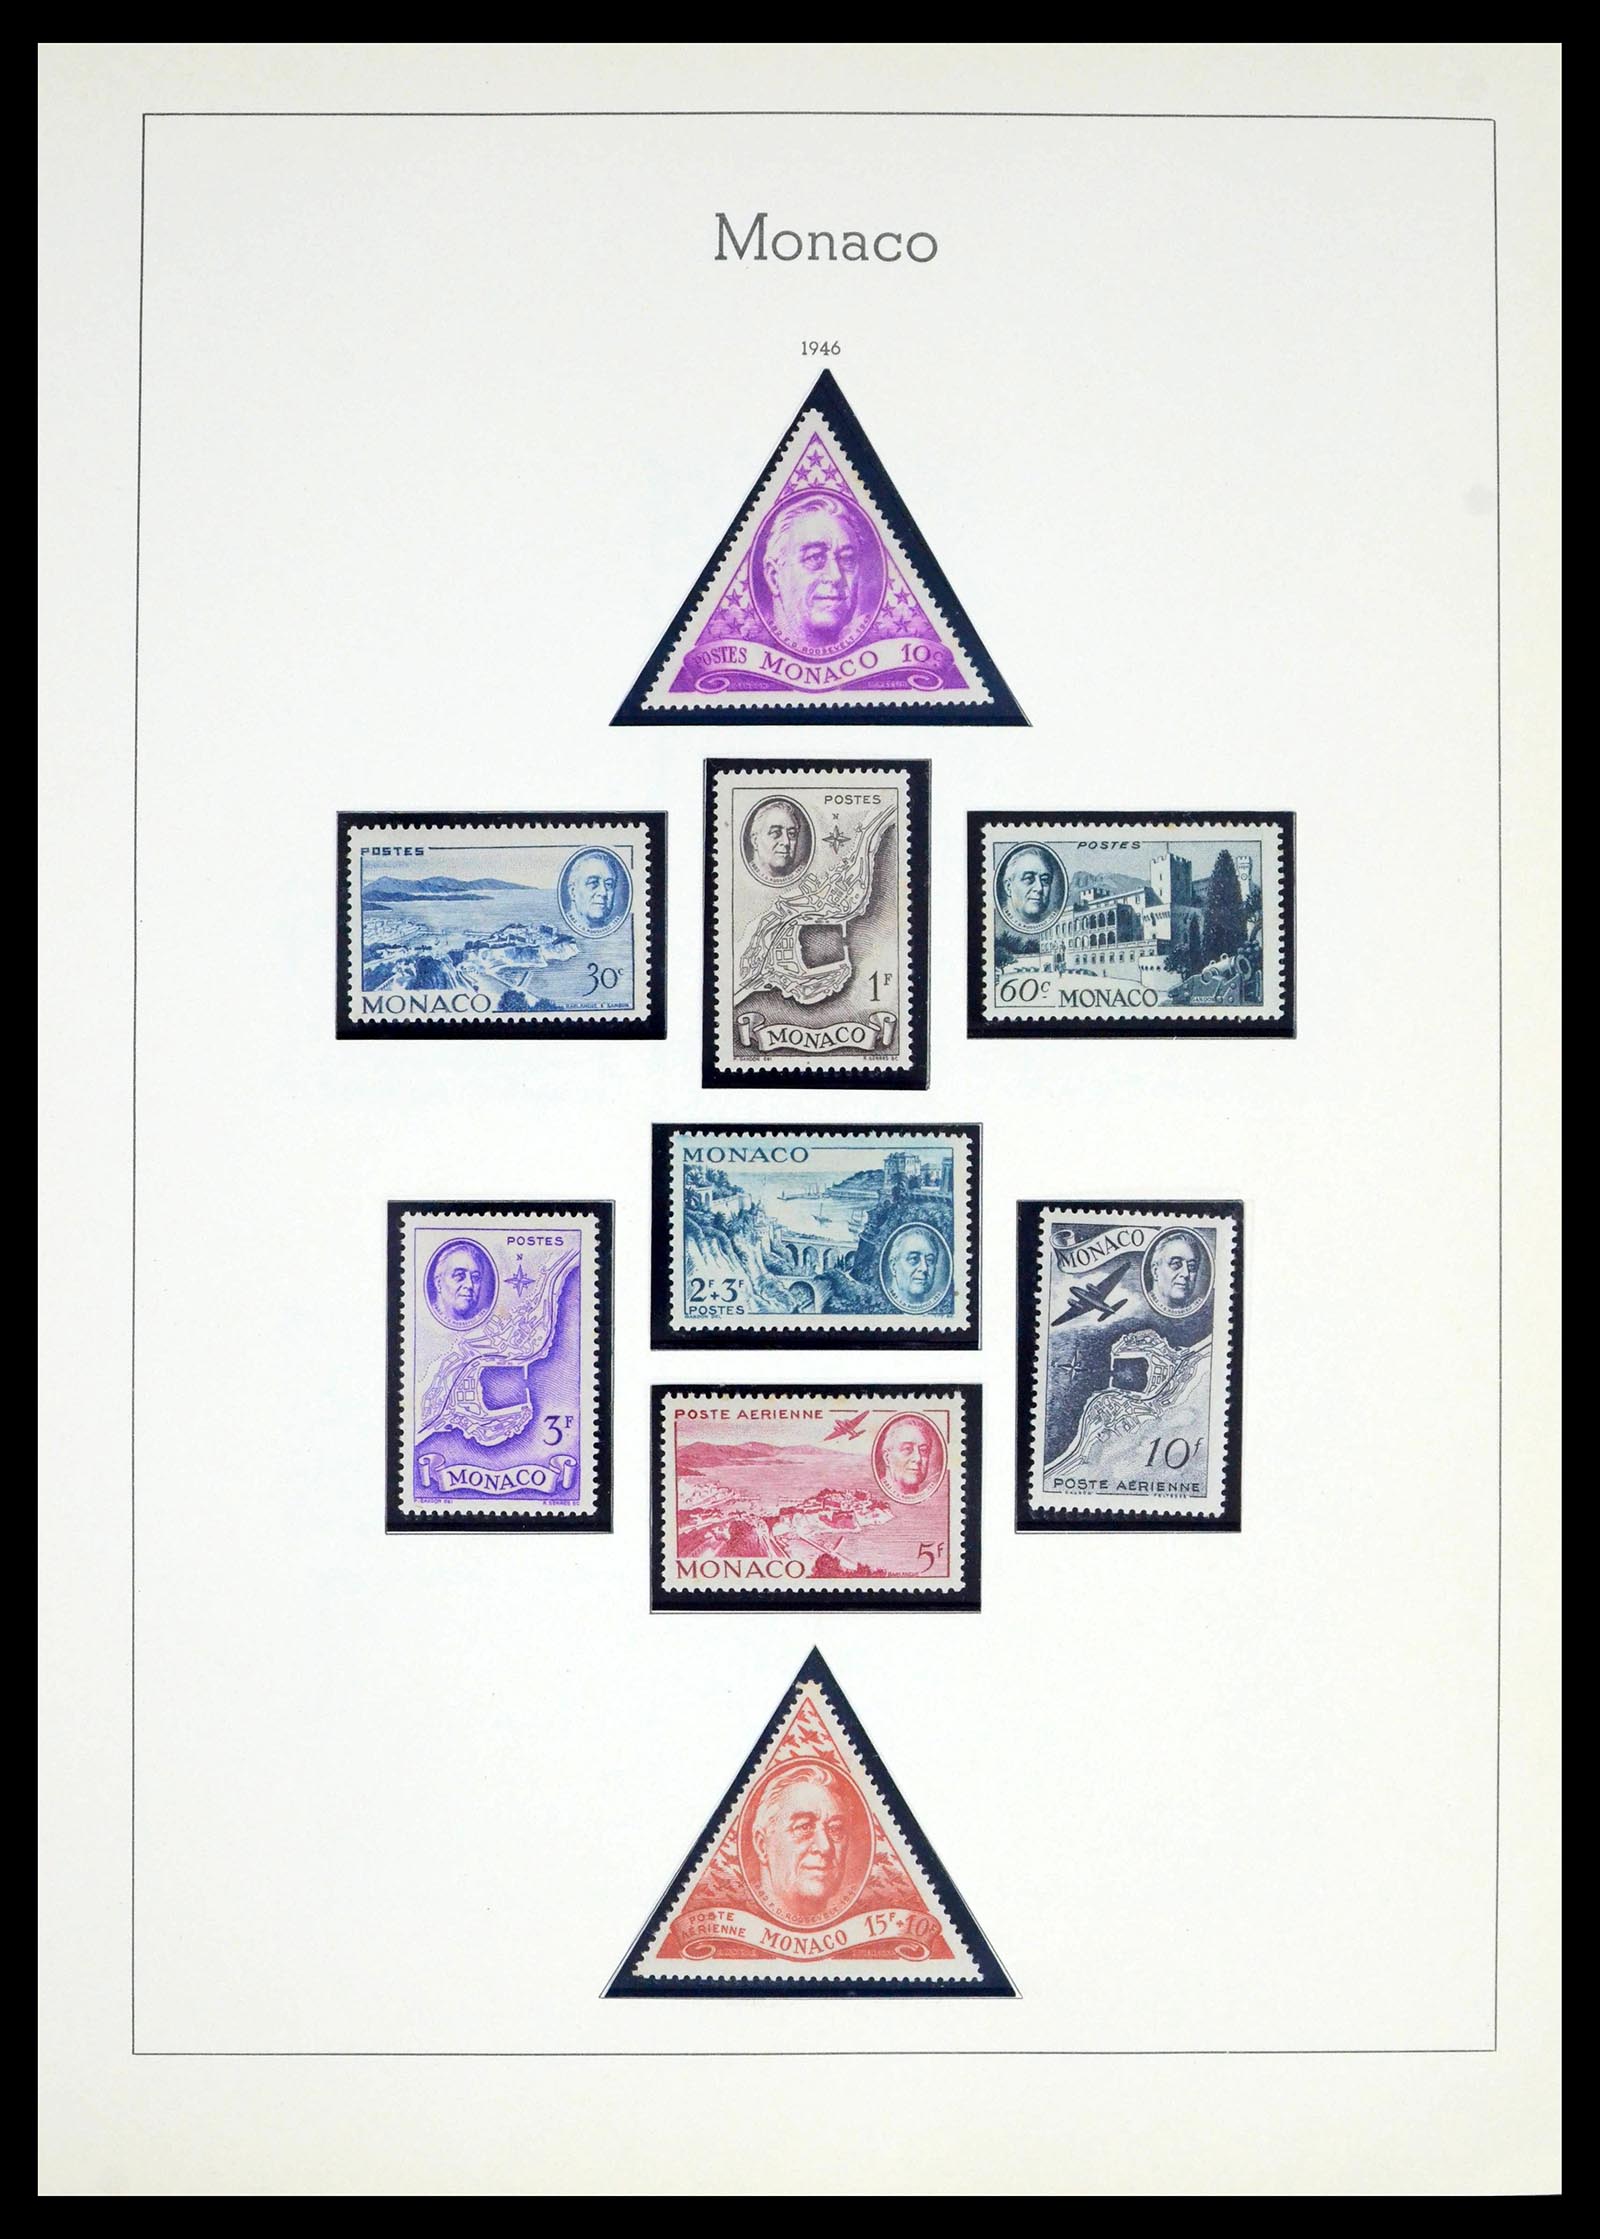 39392 0026 - Stamp collection 39392 Monaco 1885-1999.